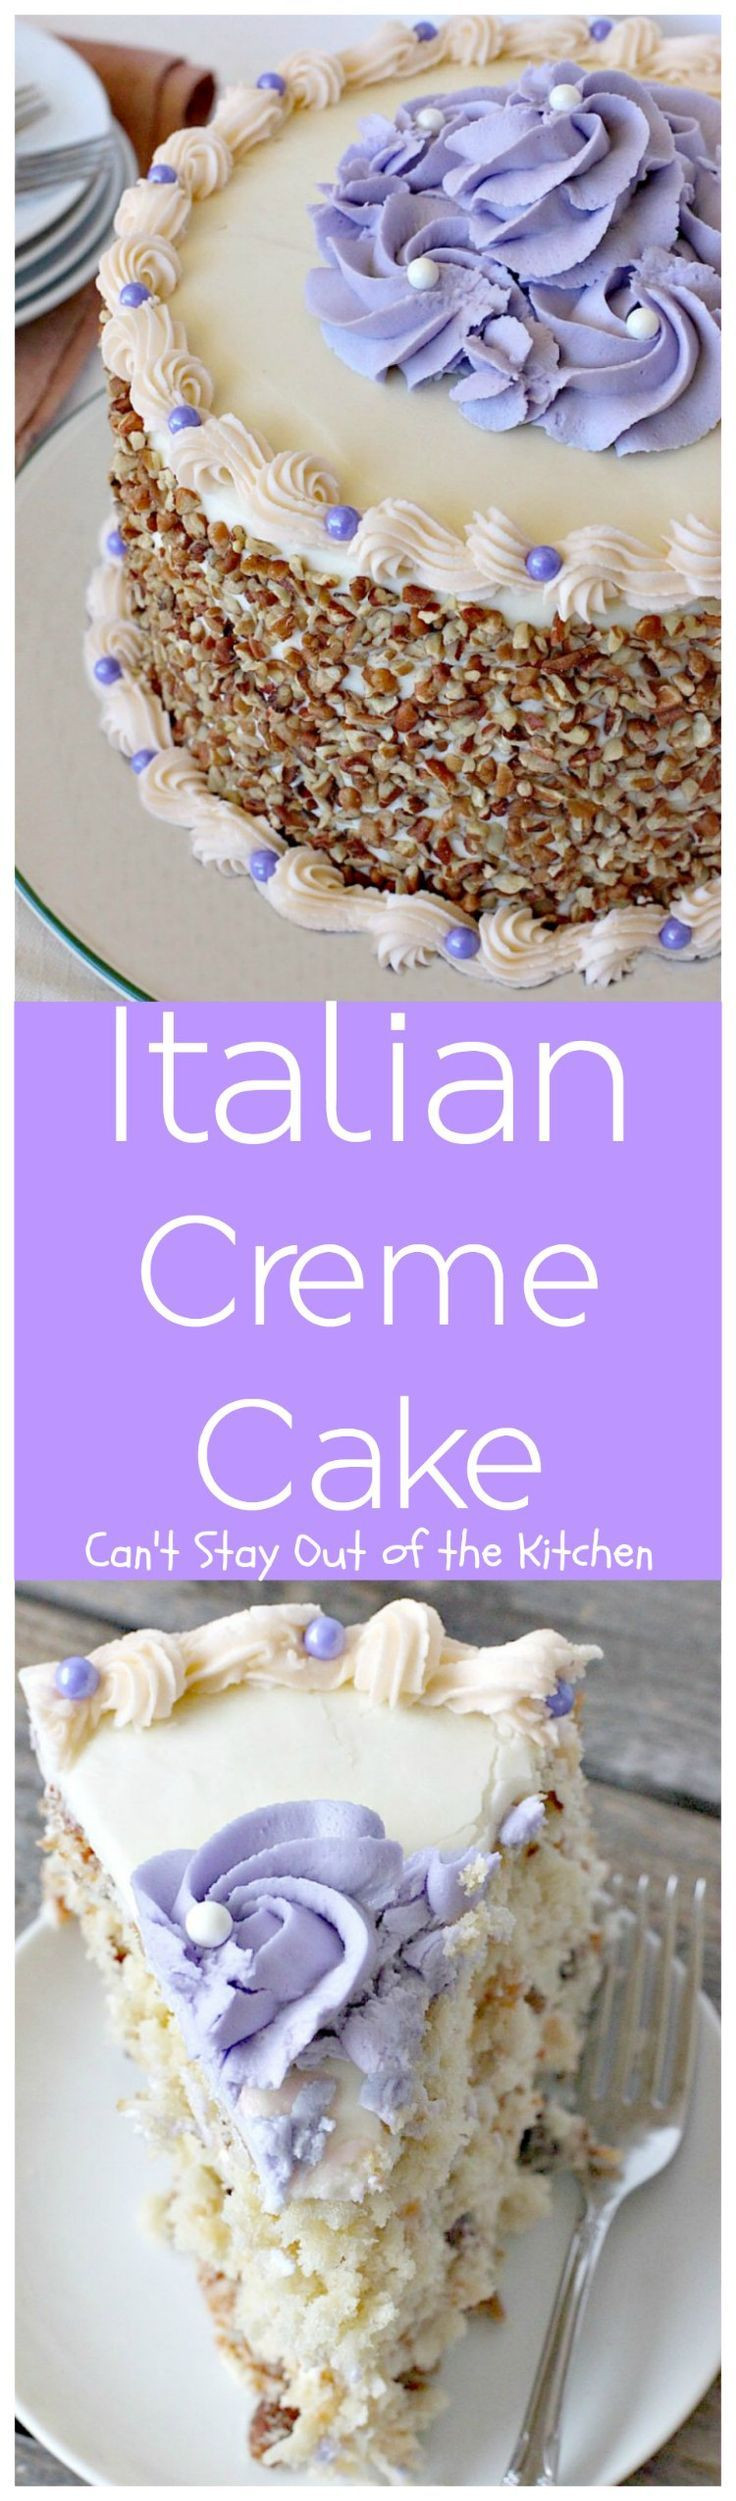 Italian Easter Desserts
 The 25 best Desserts for easter ideas on Pinterest